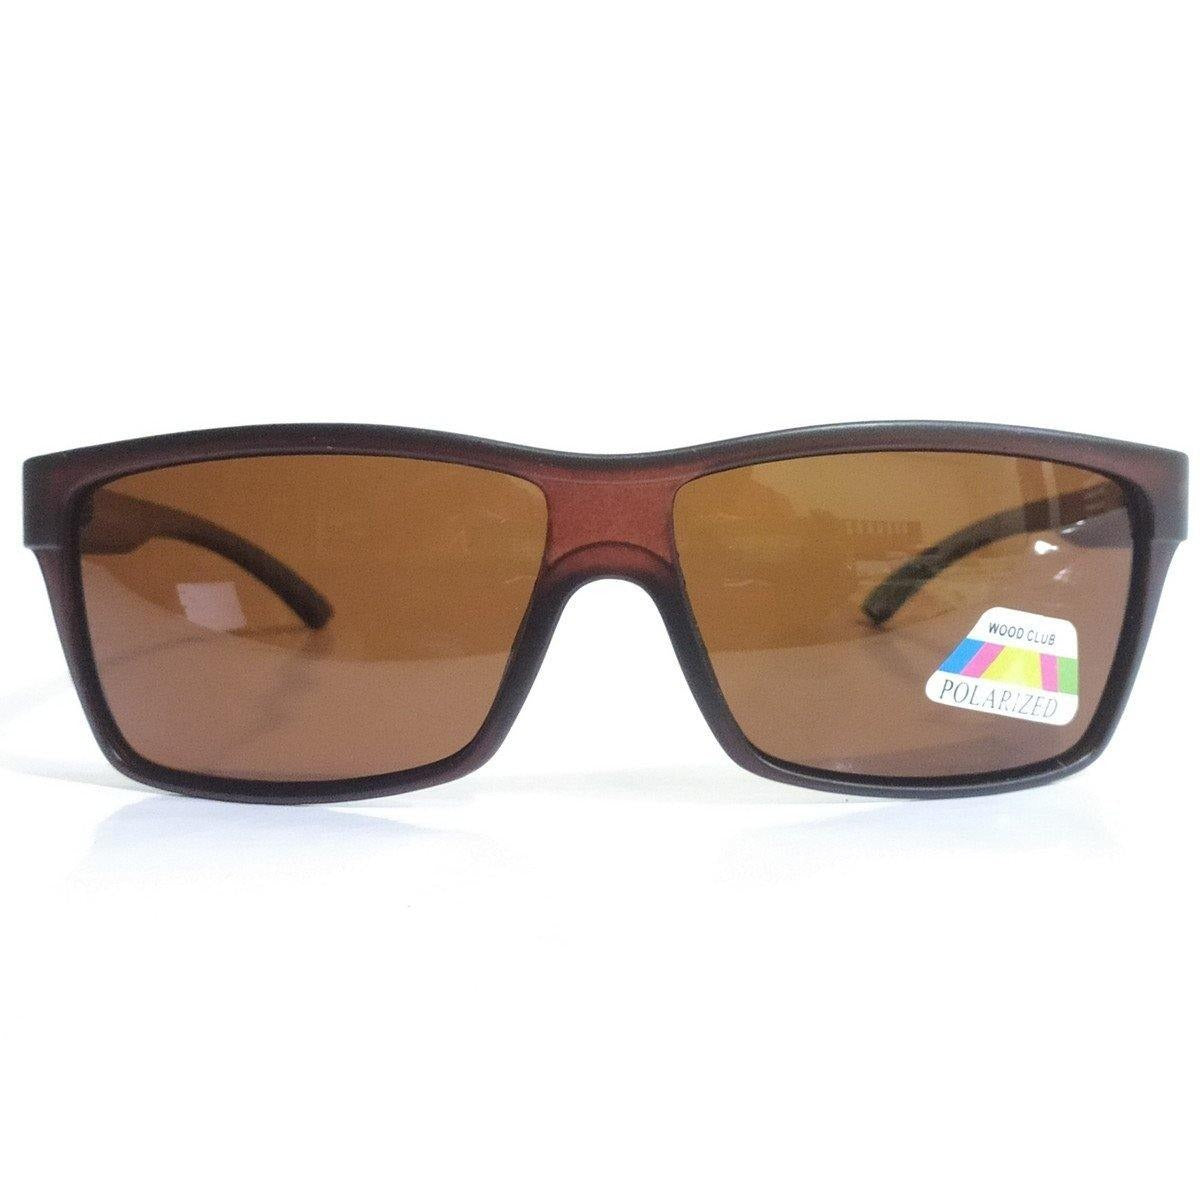 Wraparound Sports Polarized Sunglasses for Men and Women 10069BR - Glasses India Online